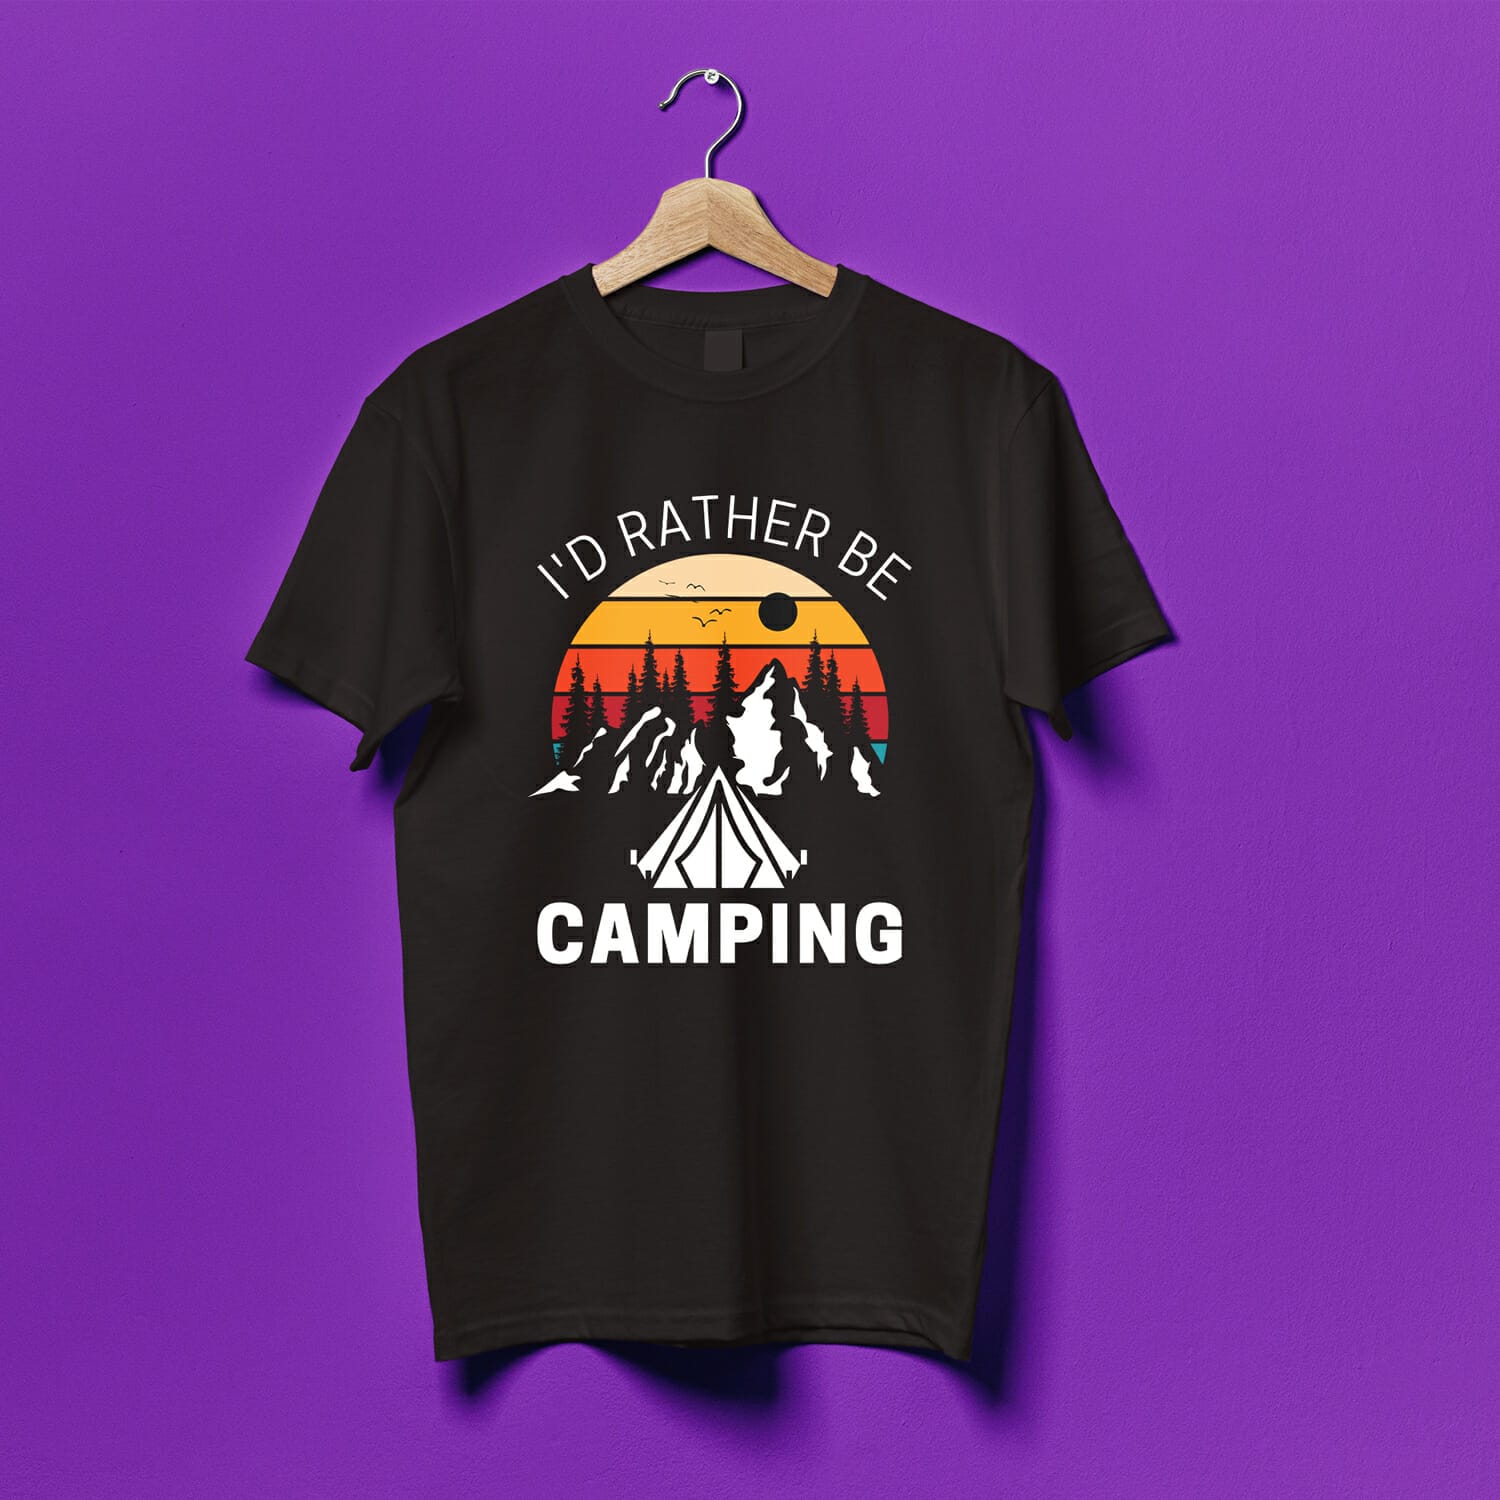 I'd rather be camping T-shirt design